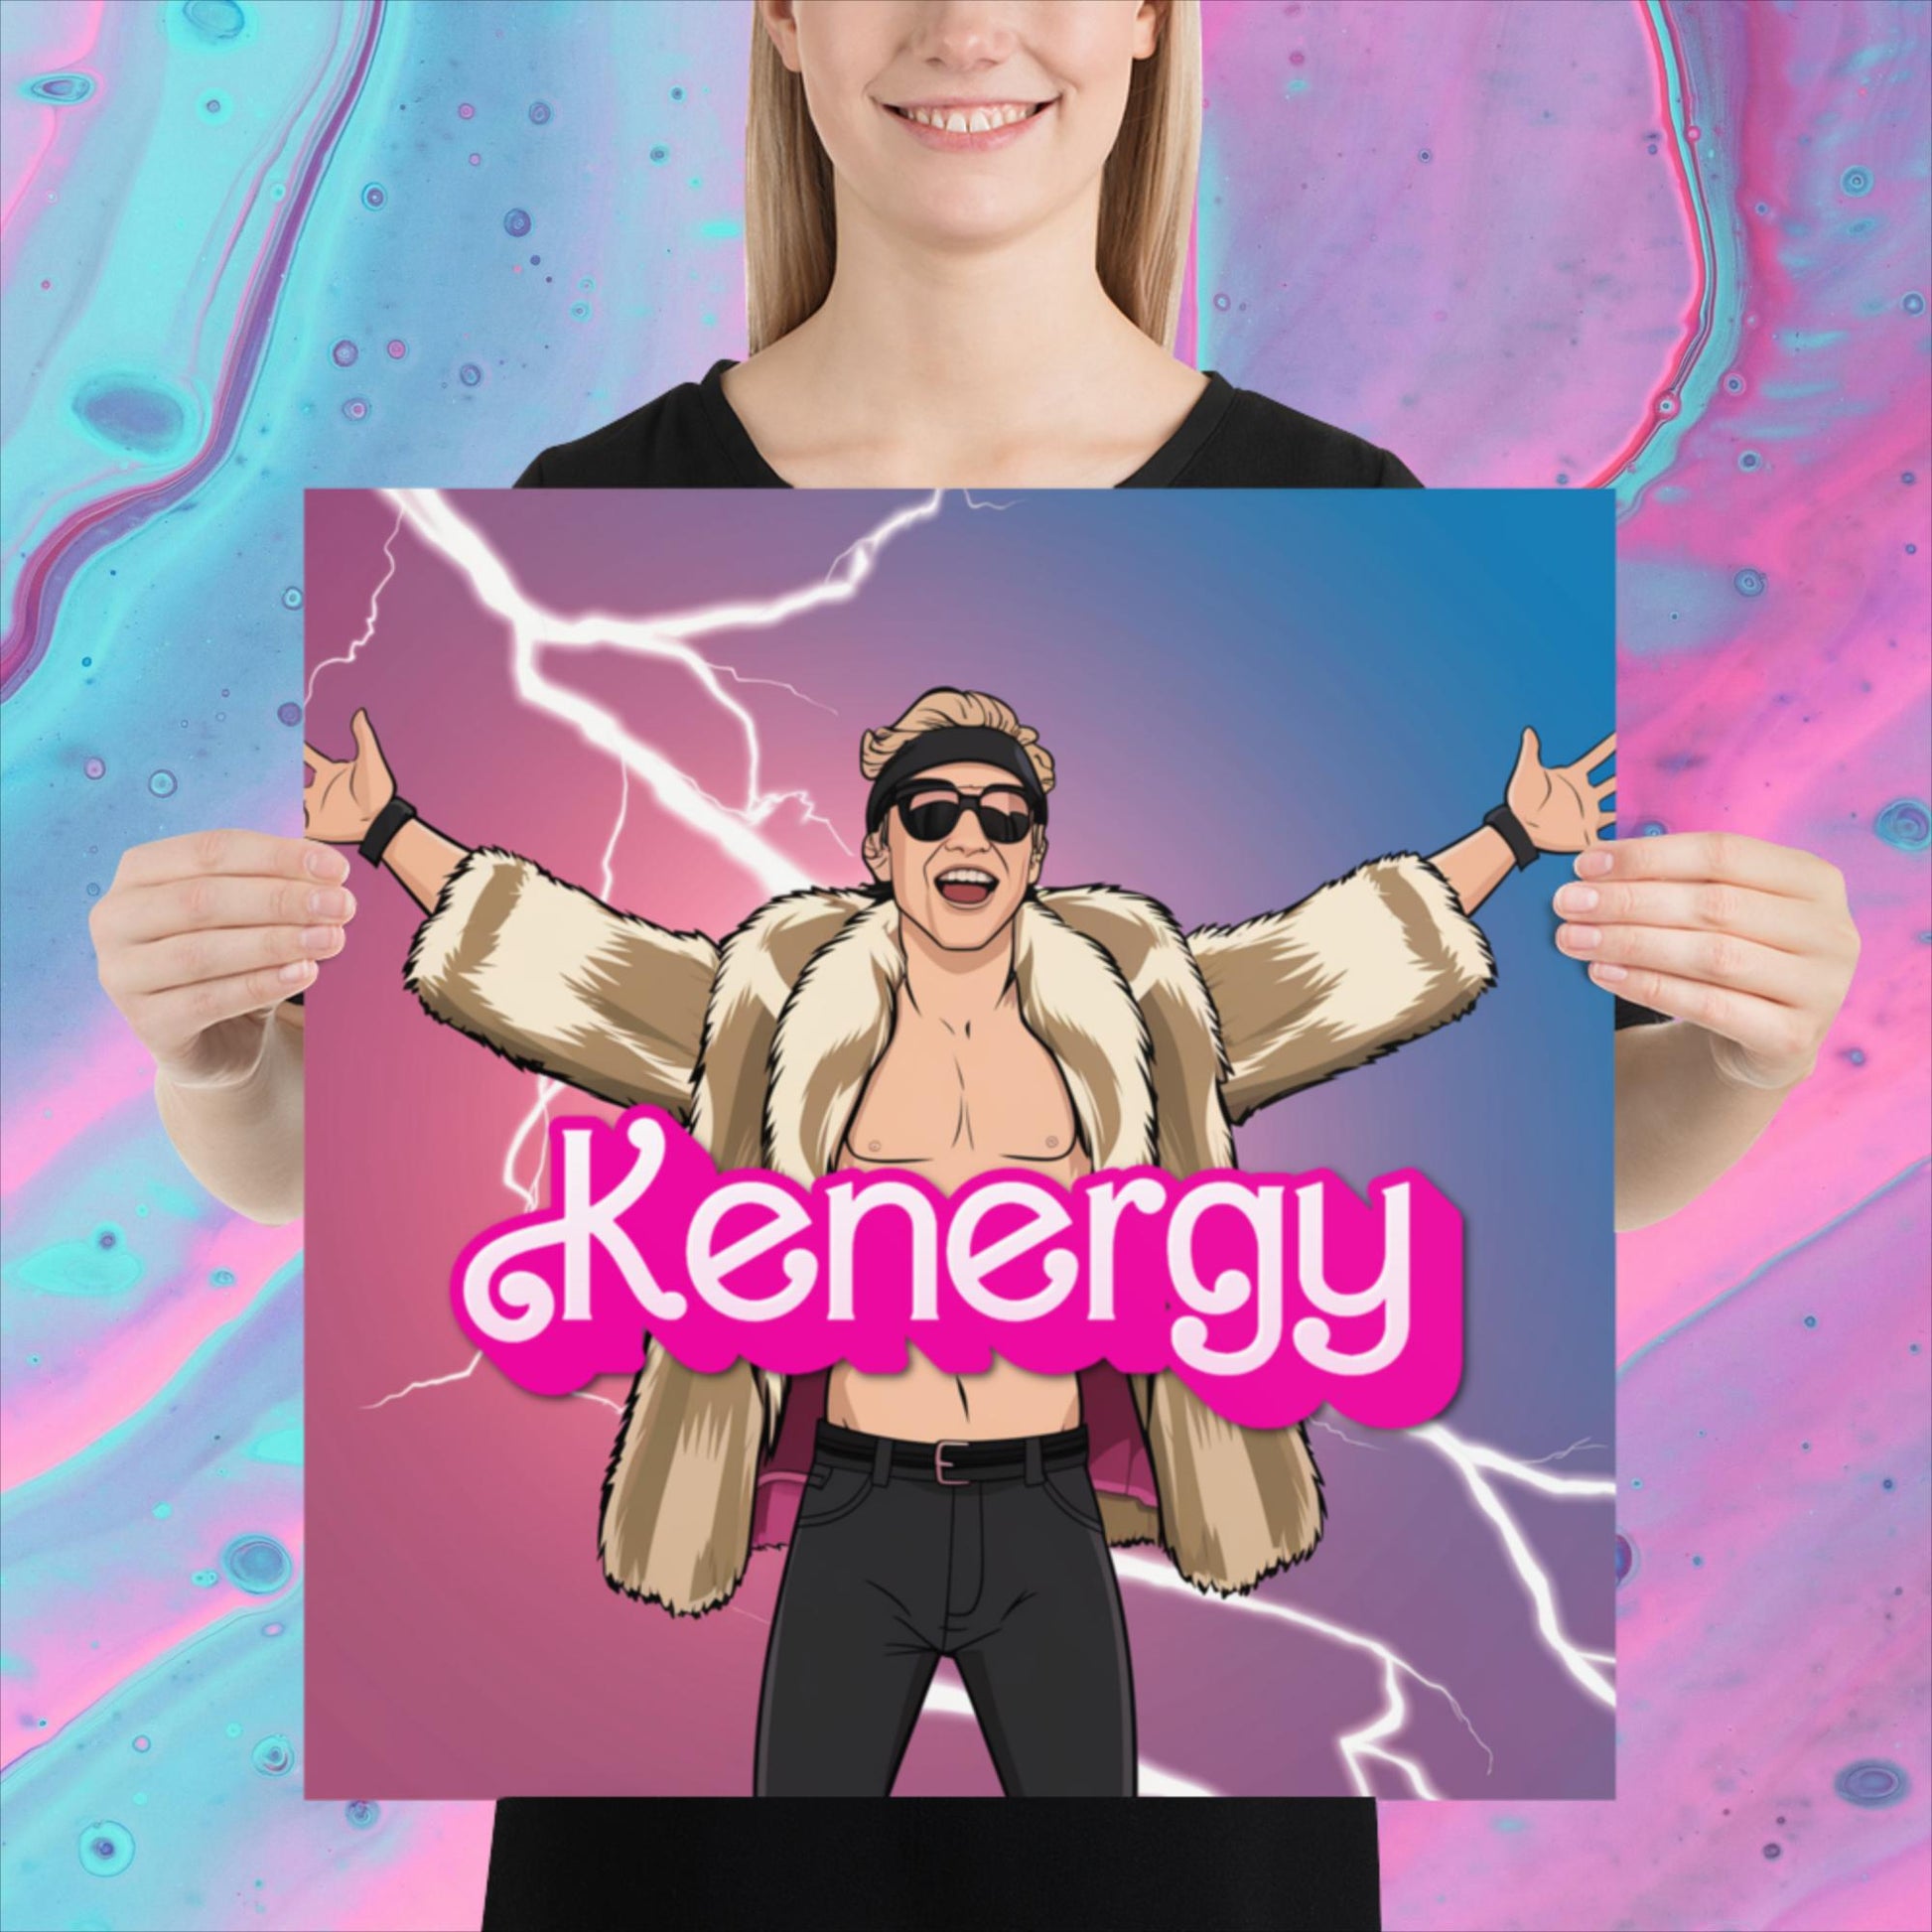 Kenergy Barbie Ryan Gosling Ken Poster Next Cult Brand Barbie, Ken, Kenergy, Movies, Ryan Gosling